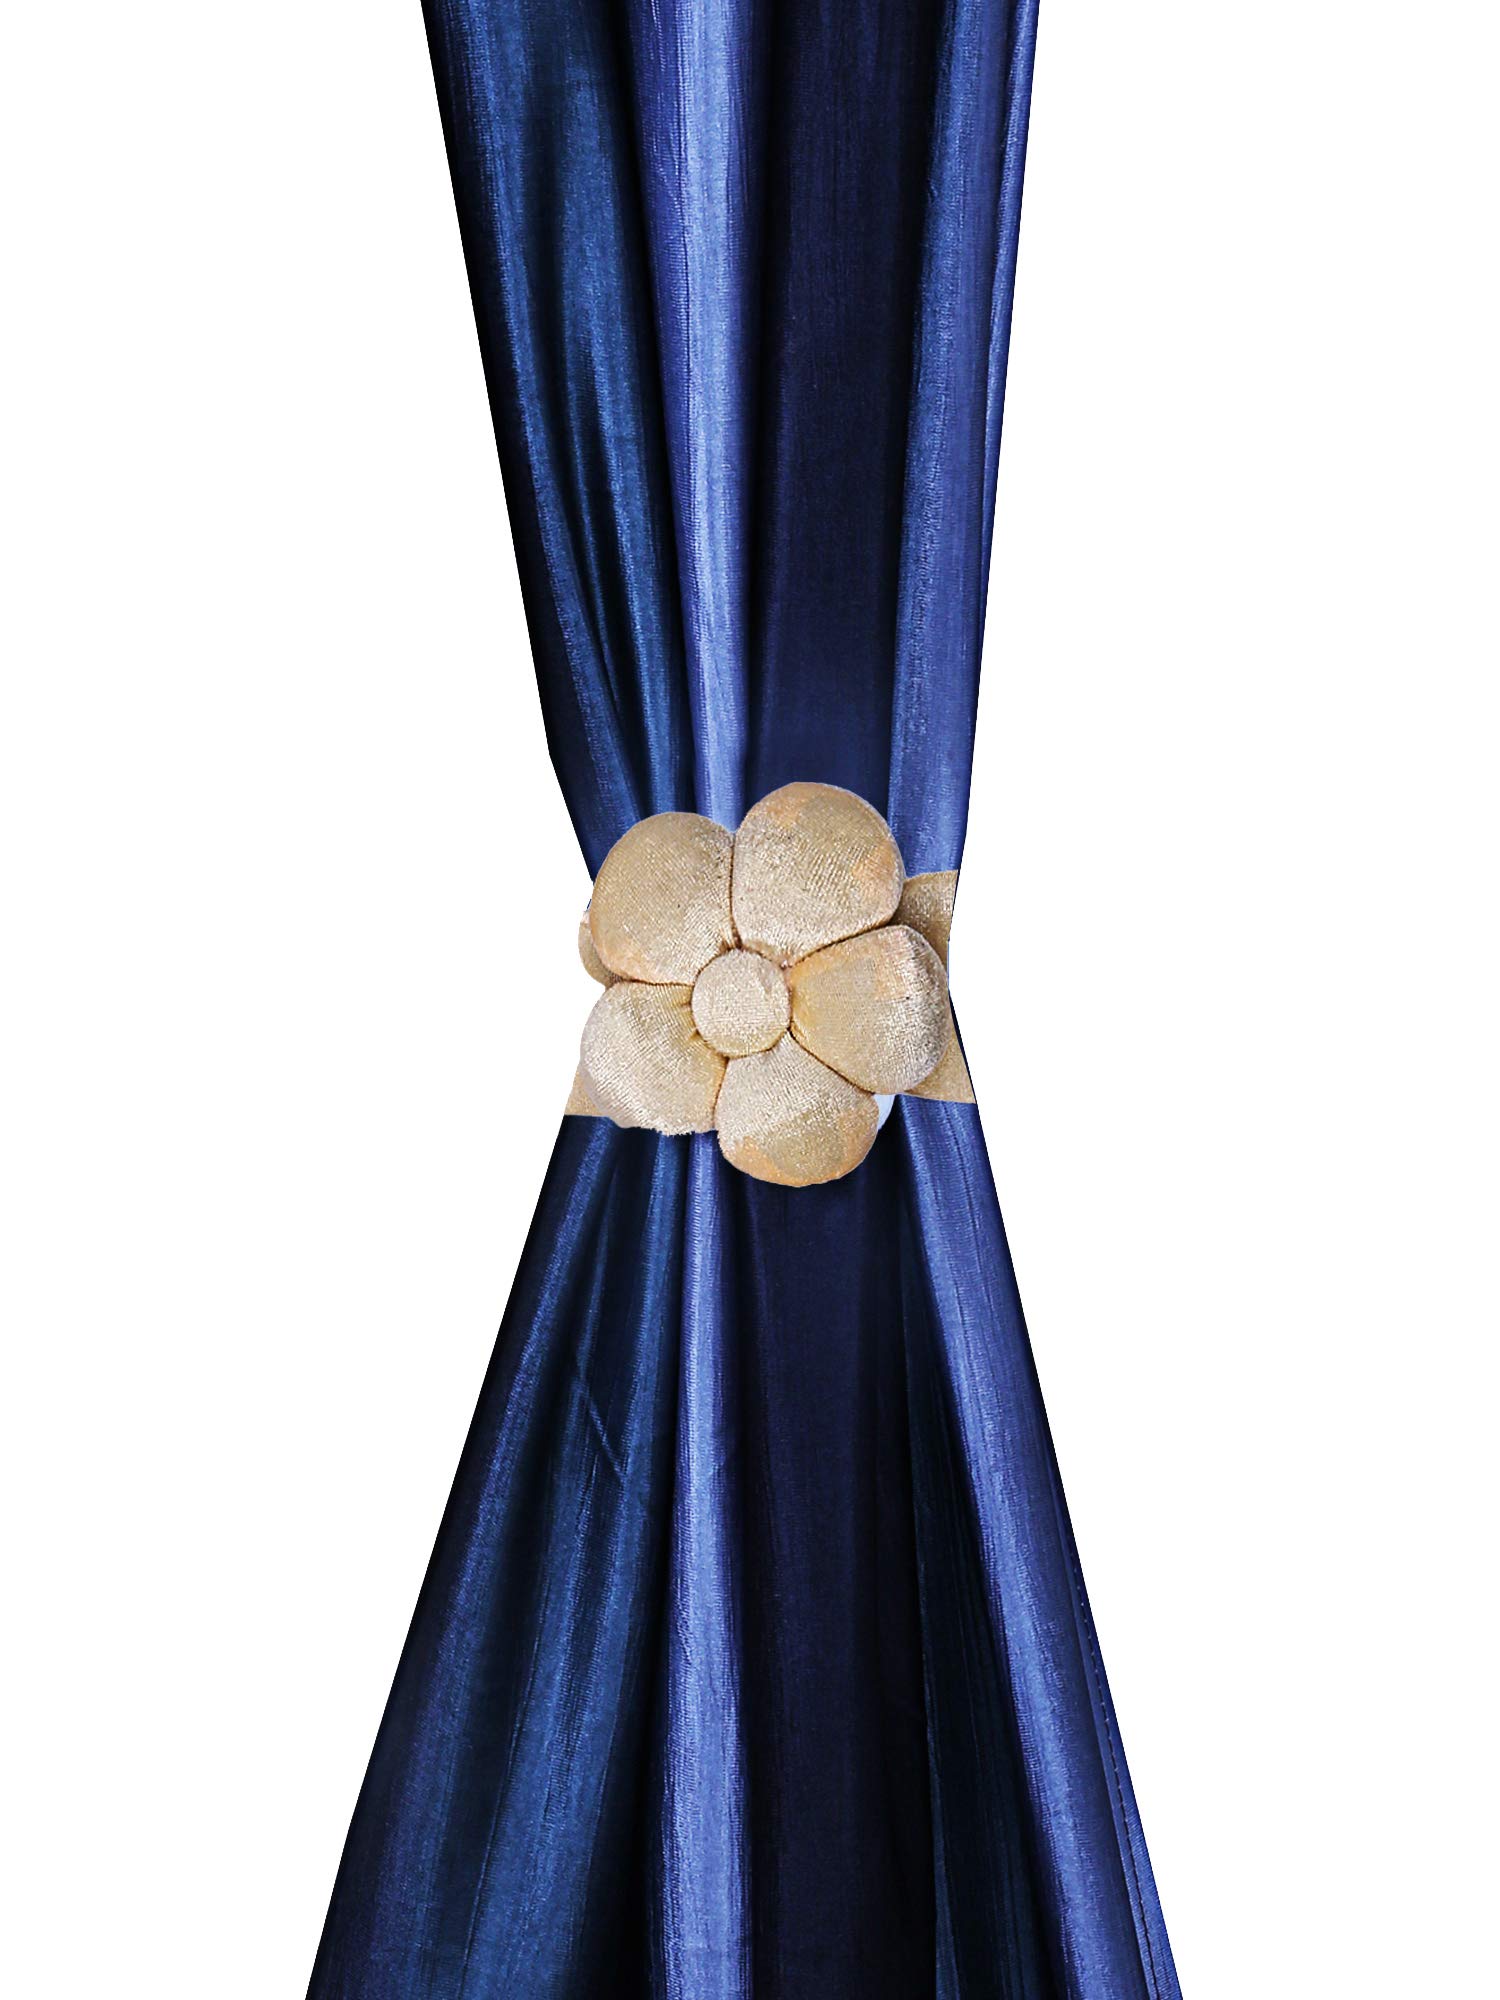 Kuber Industries Velvet 2 Pieces Curtain Tie Back Tassel Set (Gold), Standard (CTKTC024102)